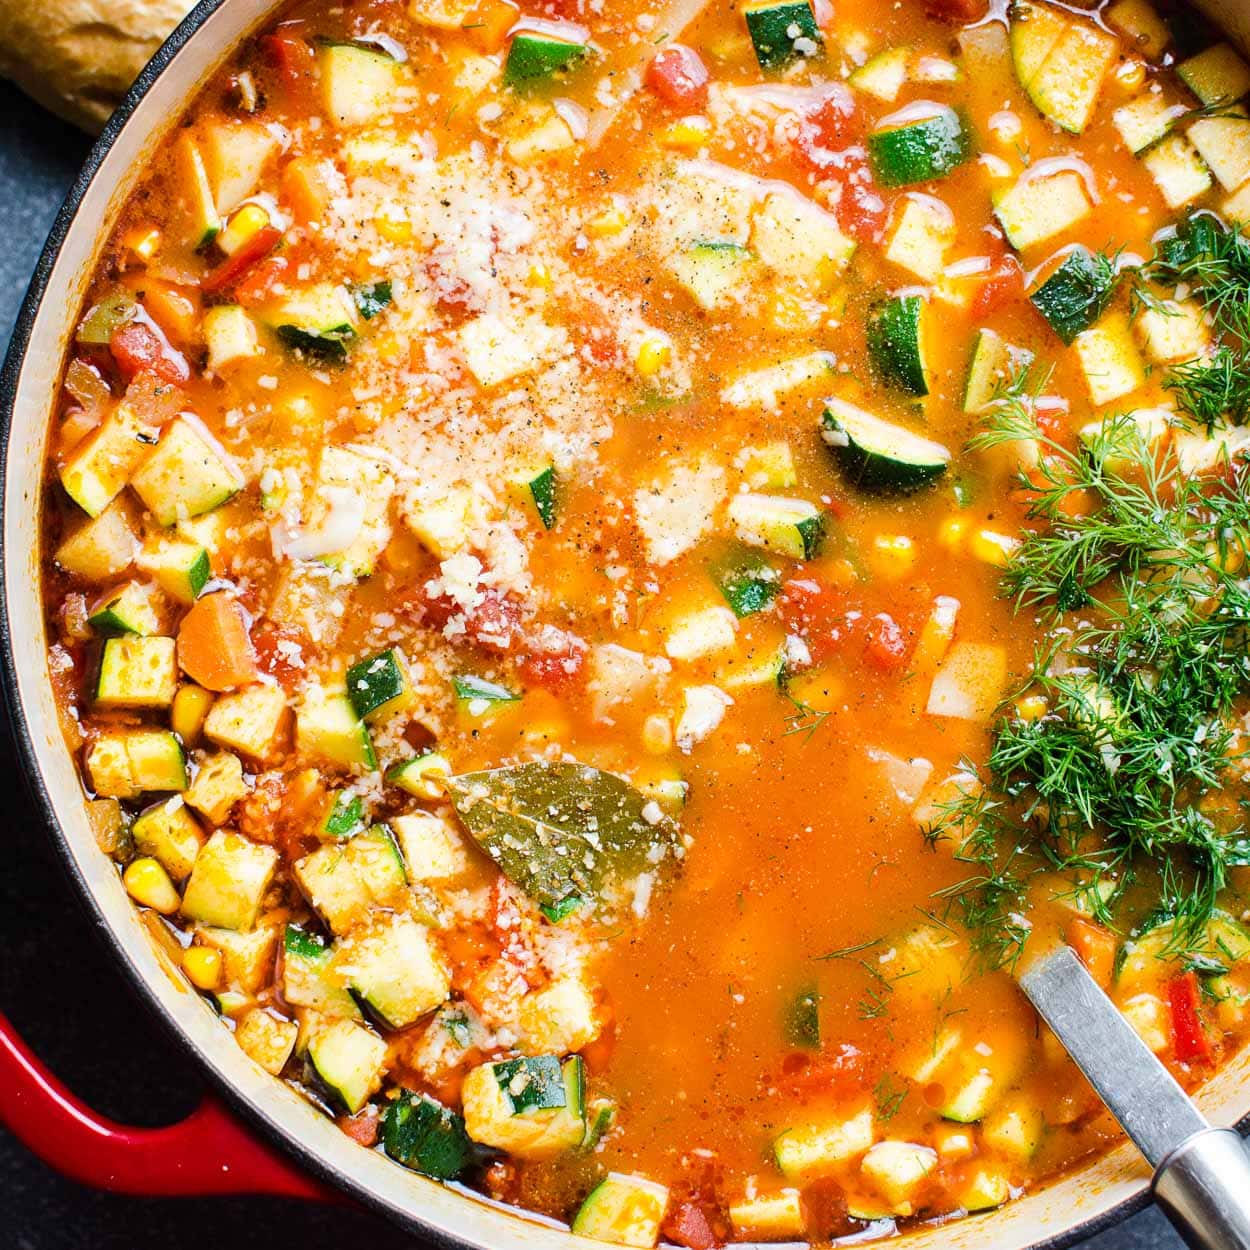 https://ifoodreal.com/wp-content/uploads/2021/10/fg-vegetable-soup-recipe.jpg